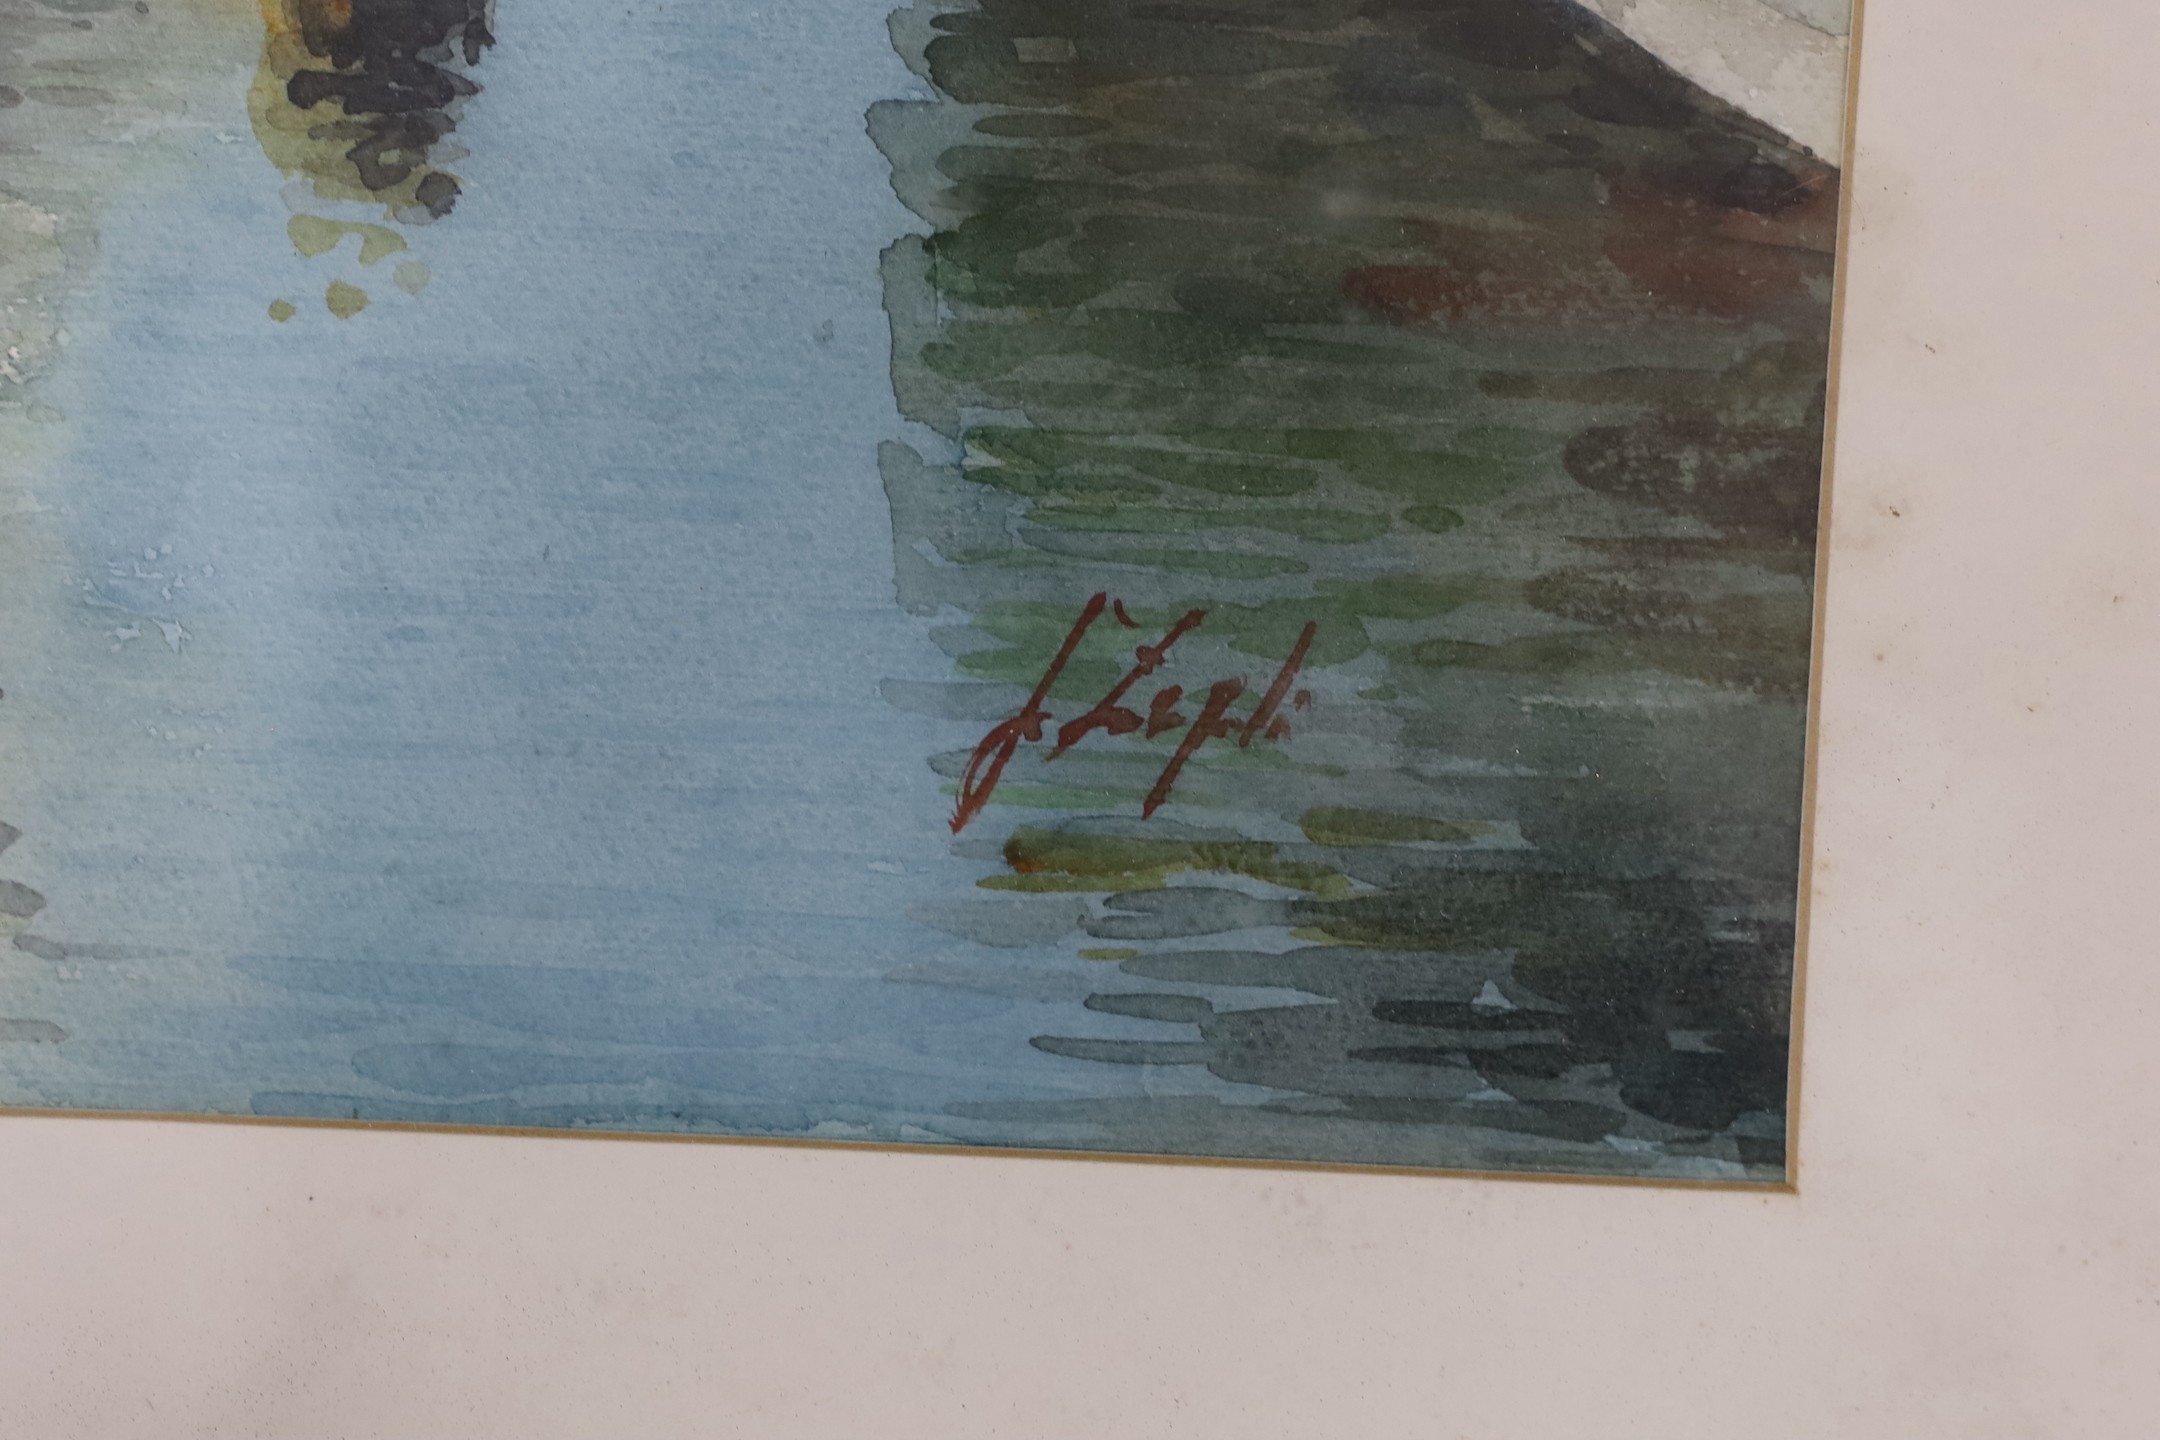 F. Zepli, watercolour, The Bridge of Sighs, Venice, 37 x 28cm